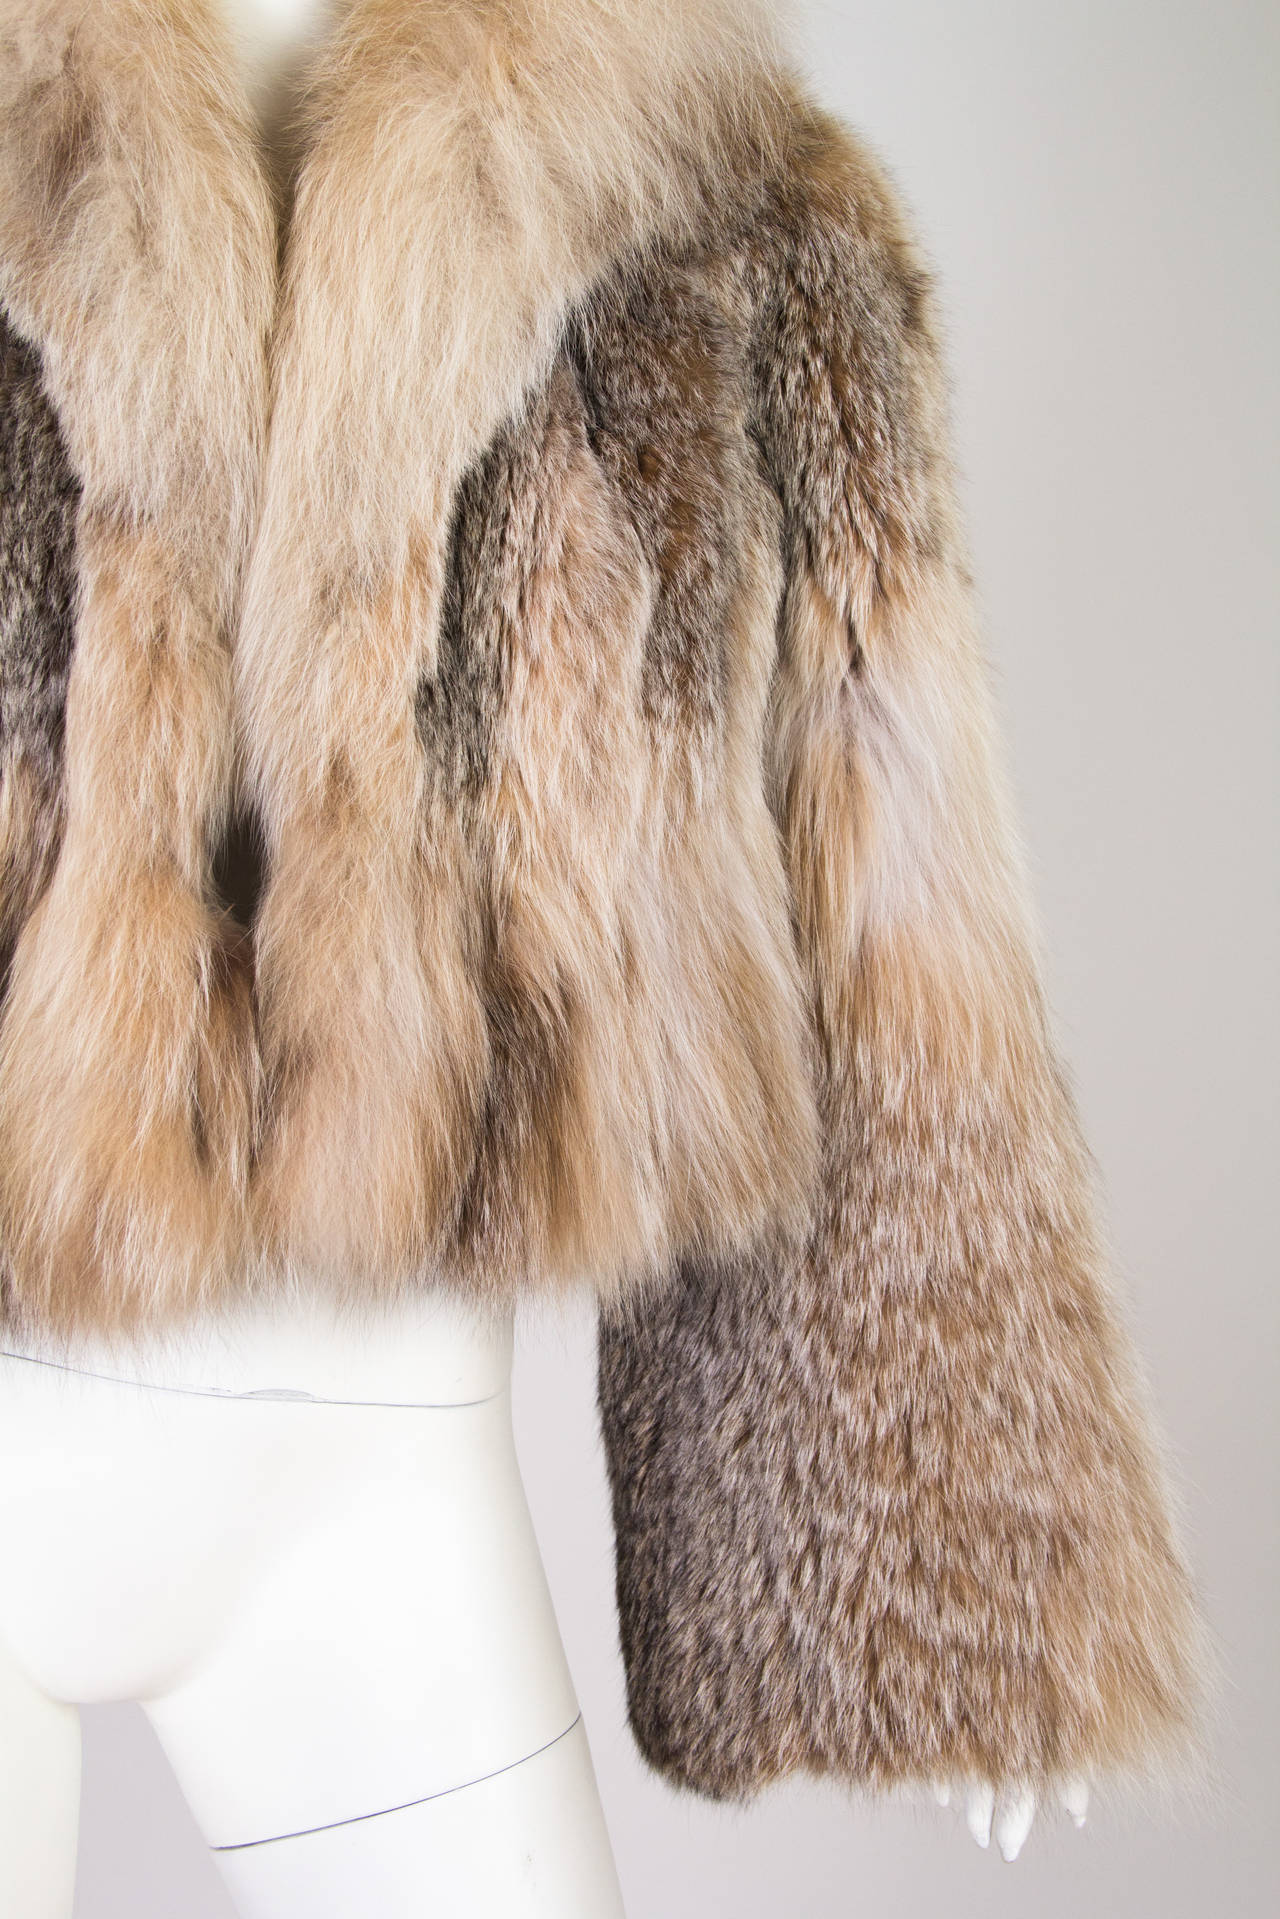 saks fifth avenue fur coats